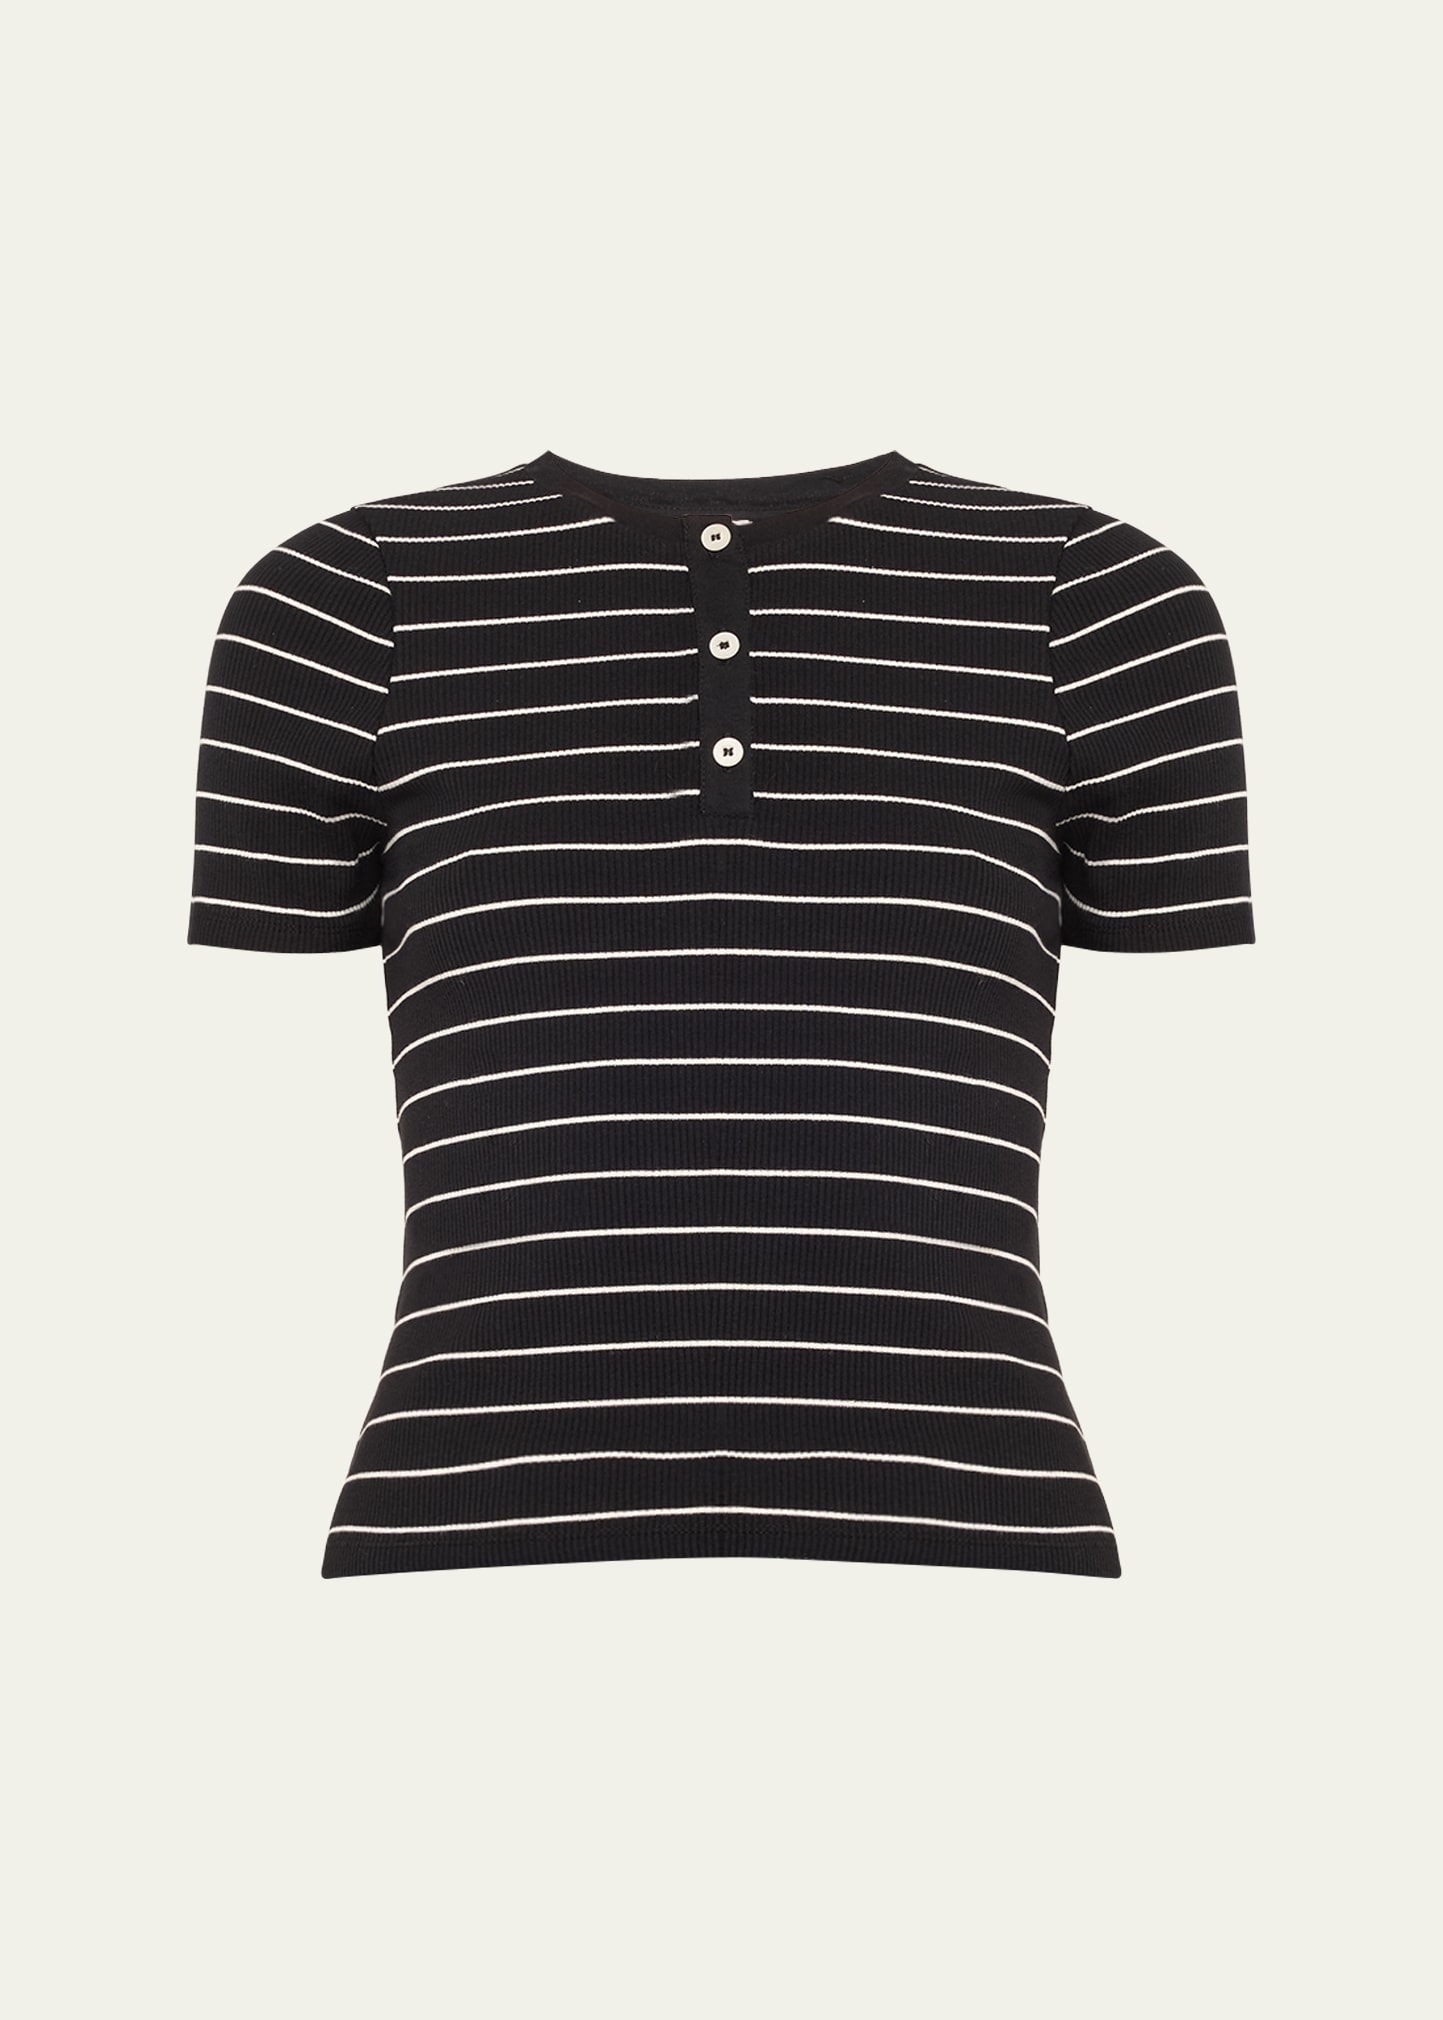 The Genie Short-Sleeve Striped Henley Shirt